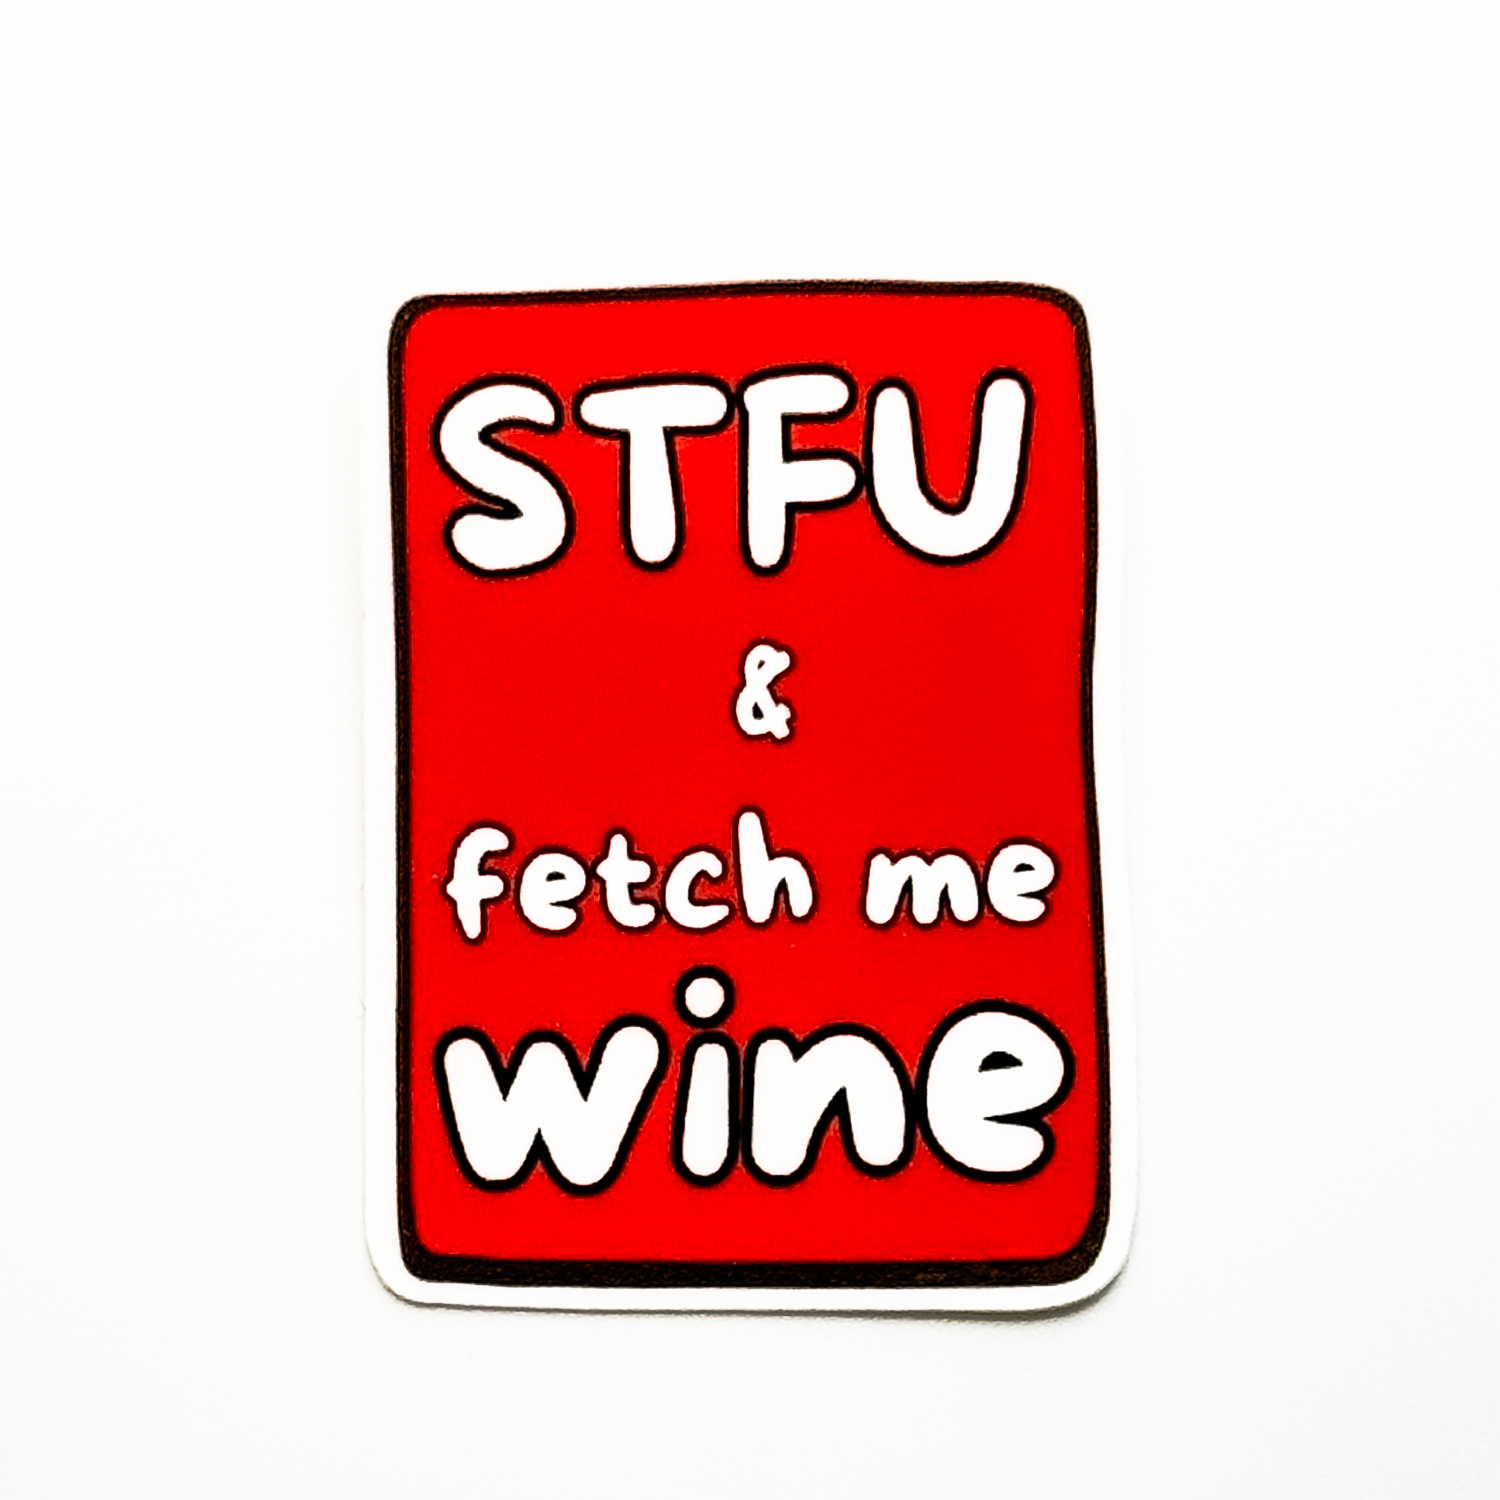 red vertical rectangle vinyl sticker  "STFU & fetch me wine"